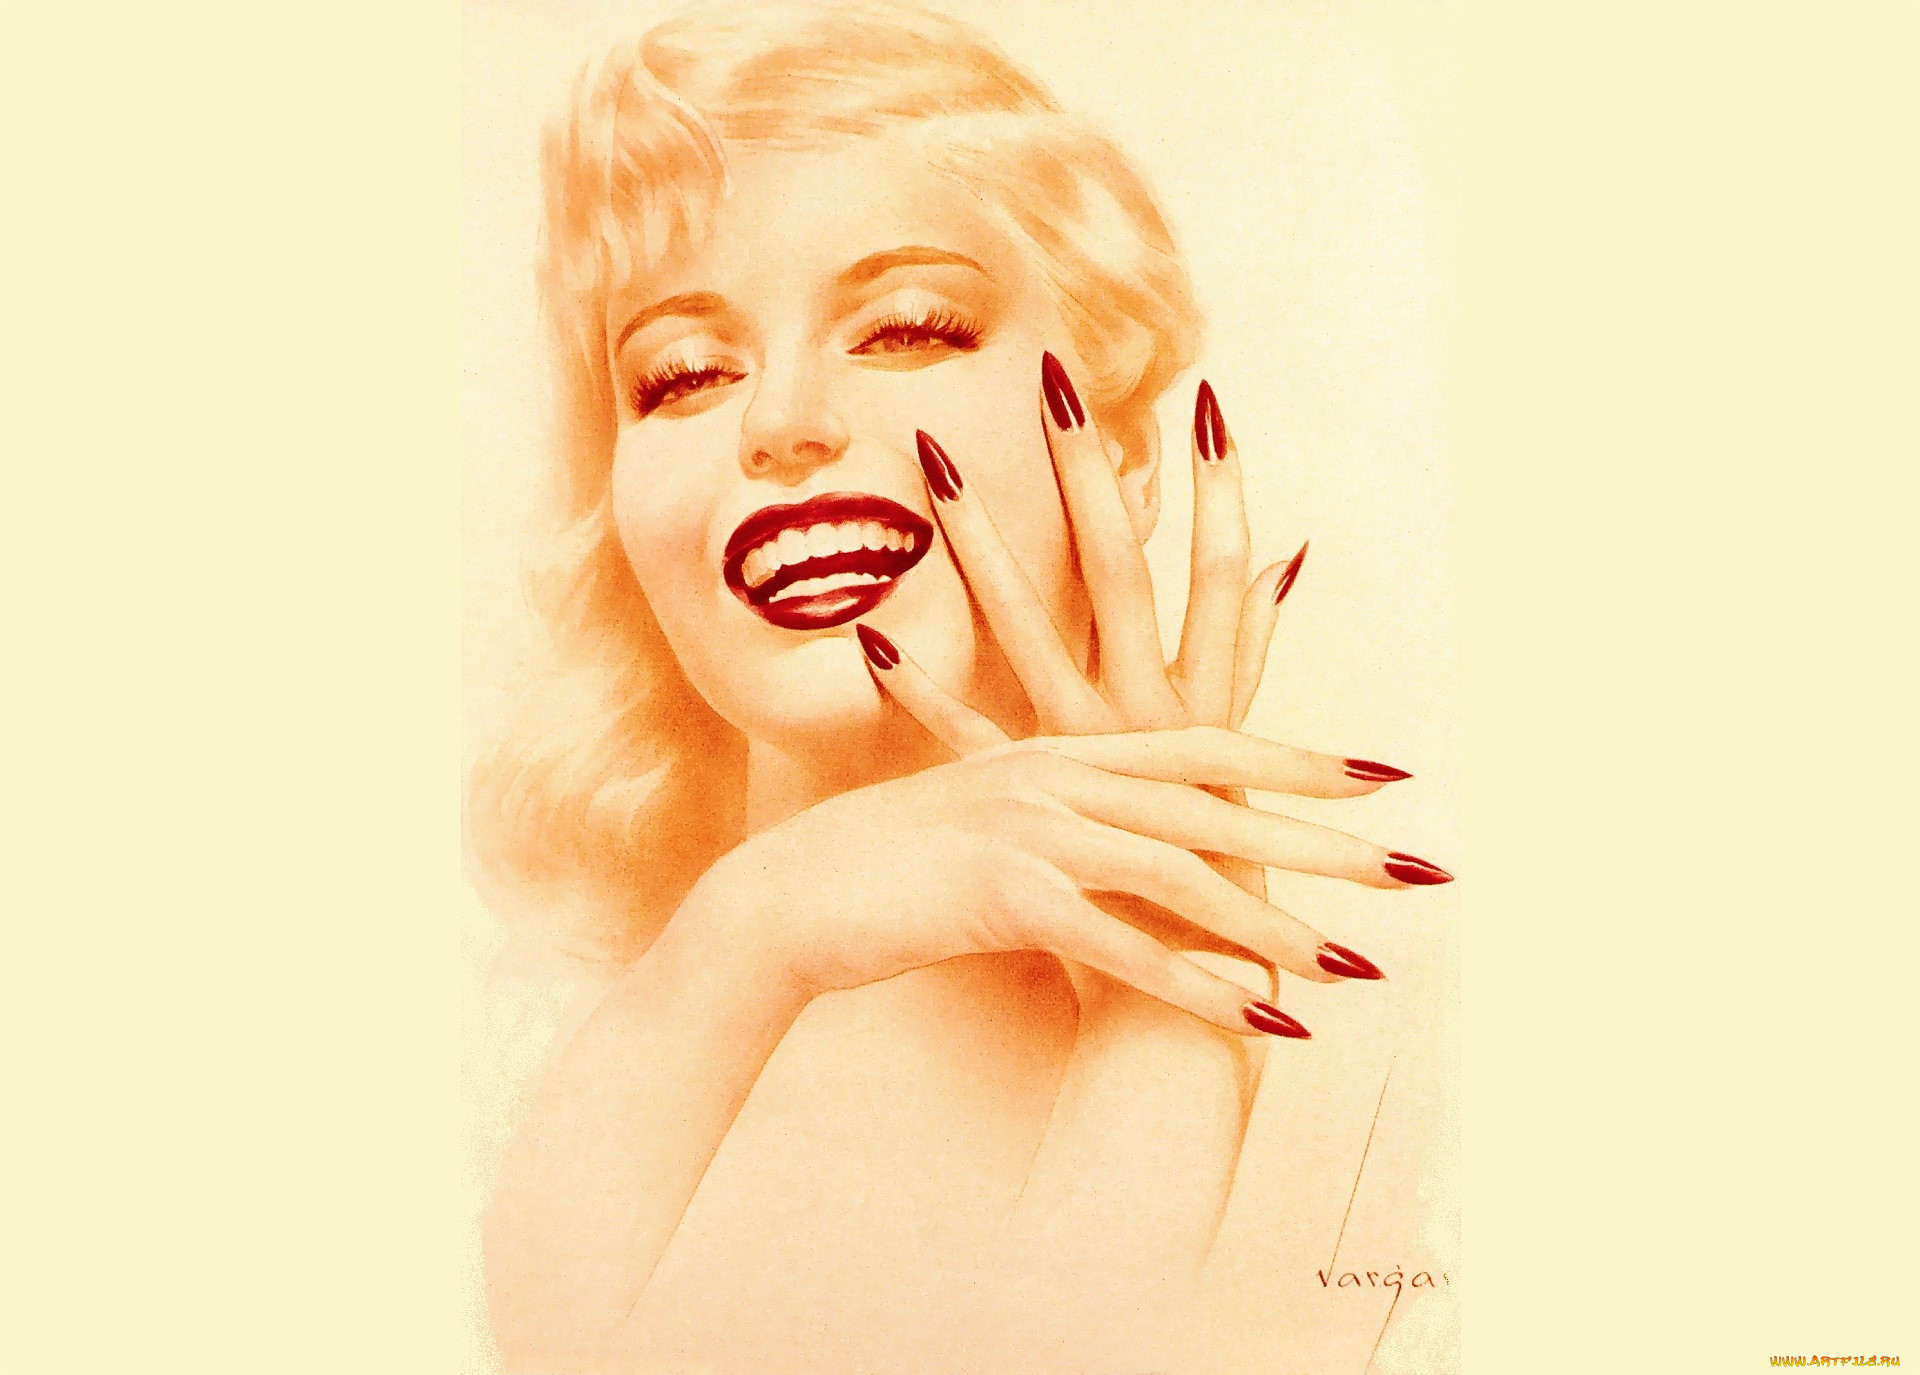 General 1920x1375 artwork women face portrait blonde beige background red nails painted nails lipstick Alberto Vargas digital art watermarked simple background